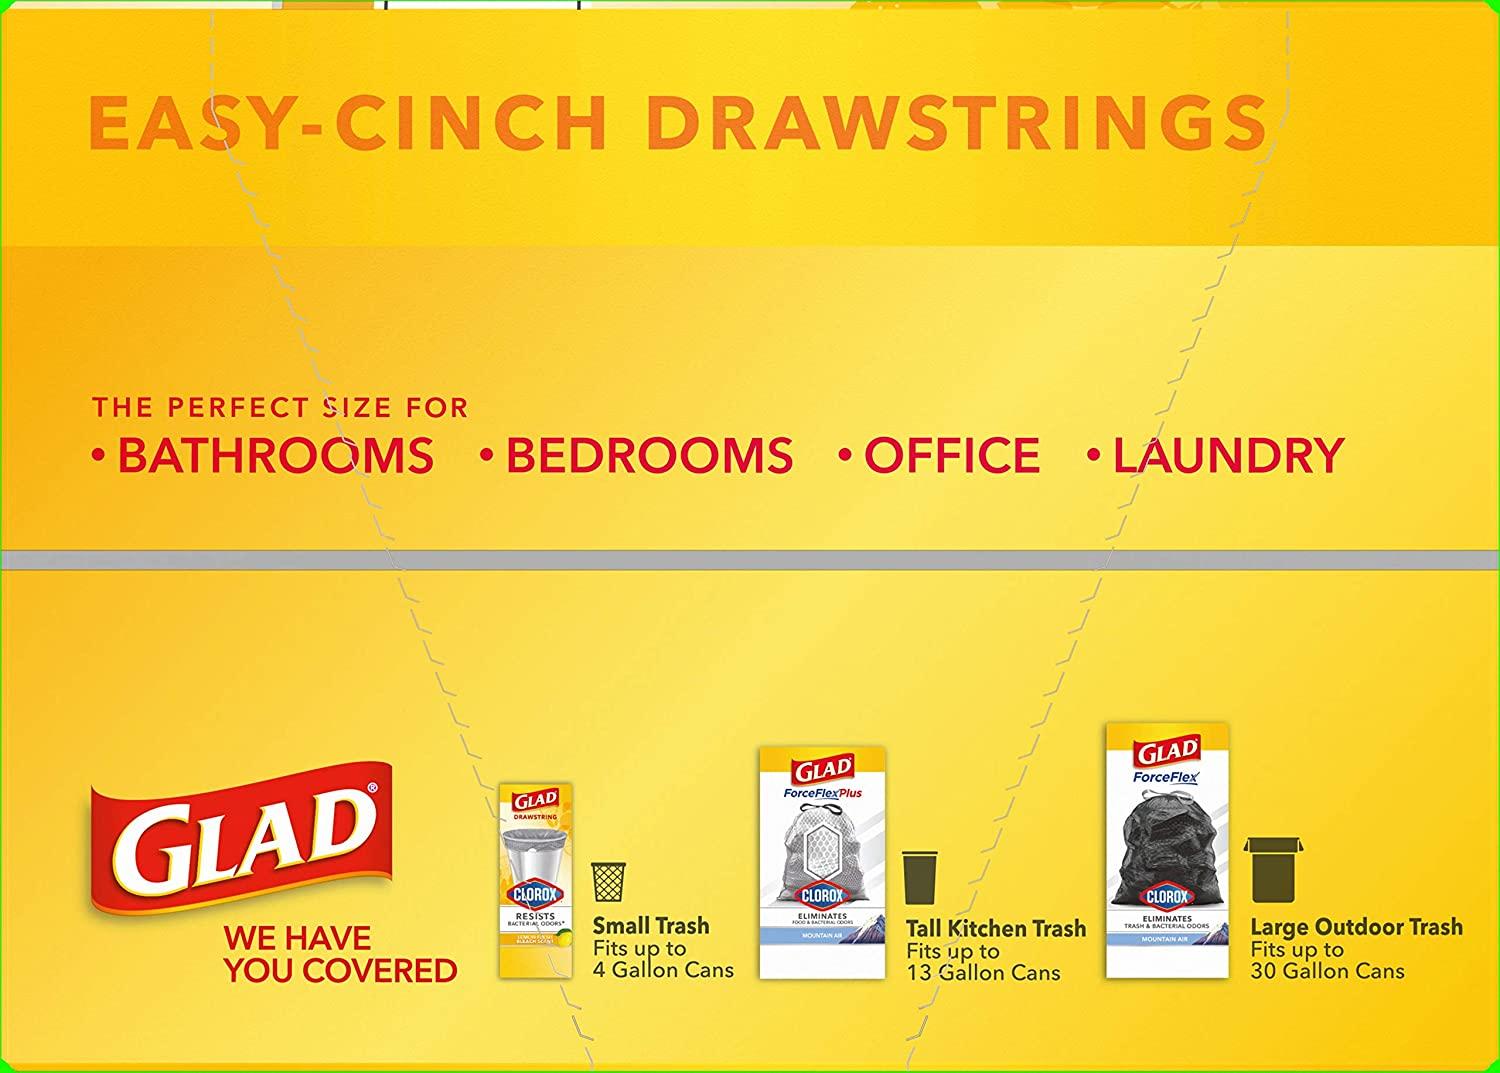 Glad with Clorox® Medium Drawstring Trash Bags Lemon Fresh Bleach Scent